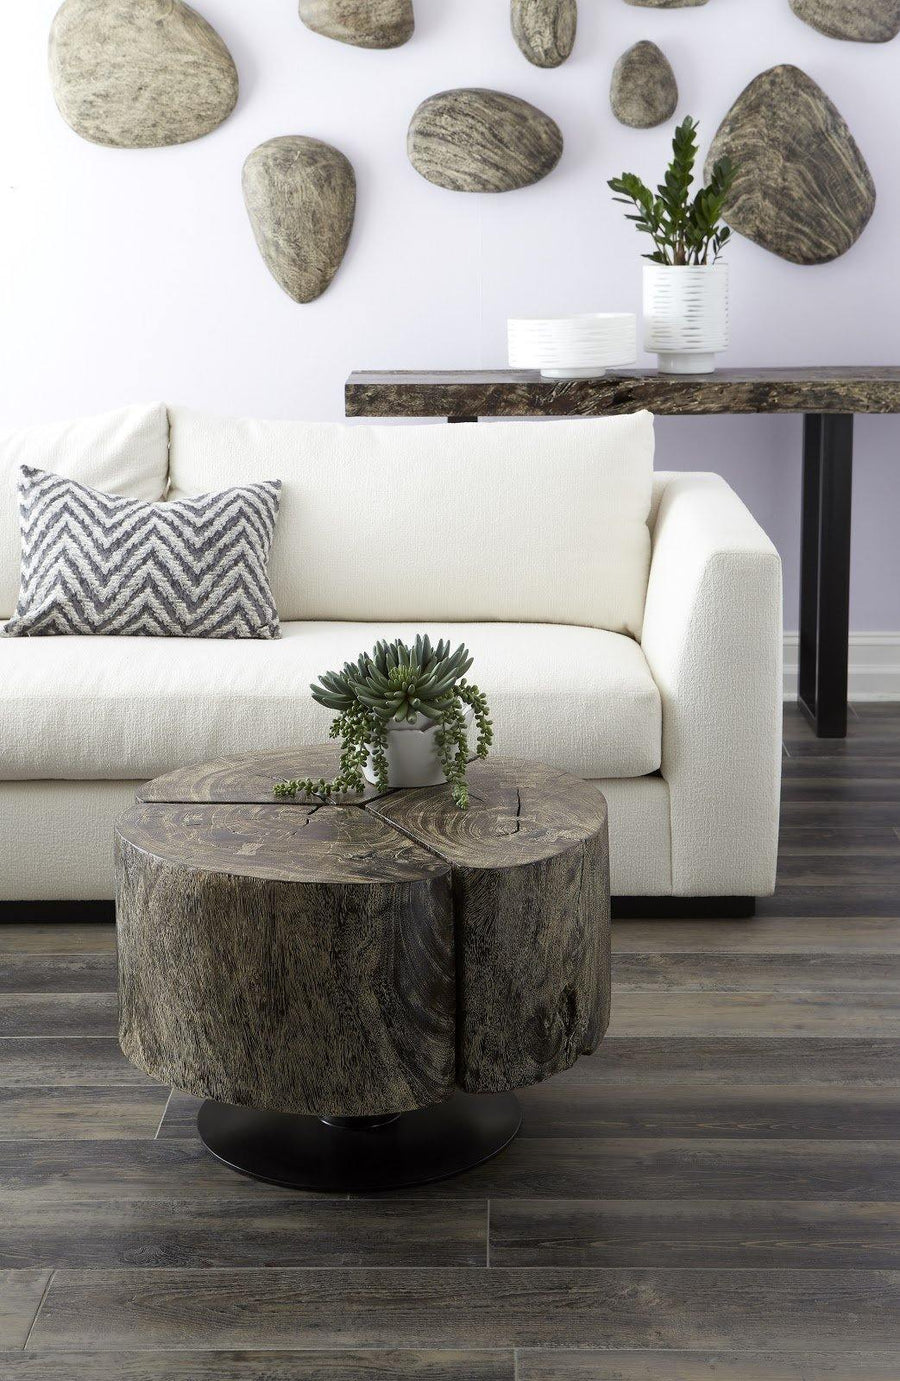 Clover Coffee Table Chamcha Wood, Grey Stone Finish, Metal Base - Maison Vogue